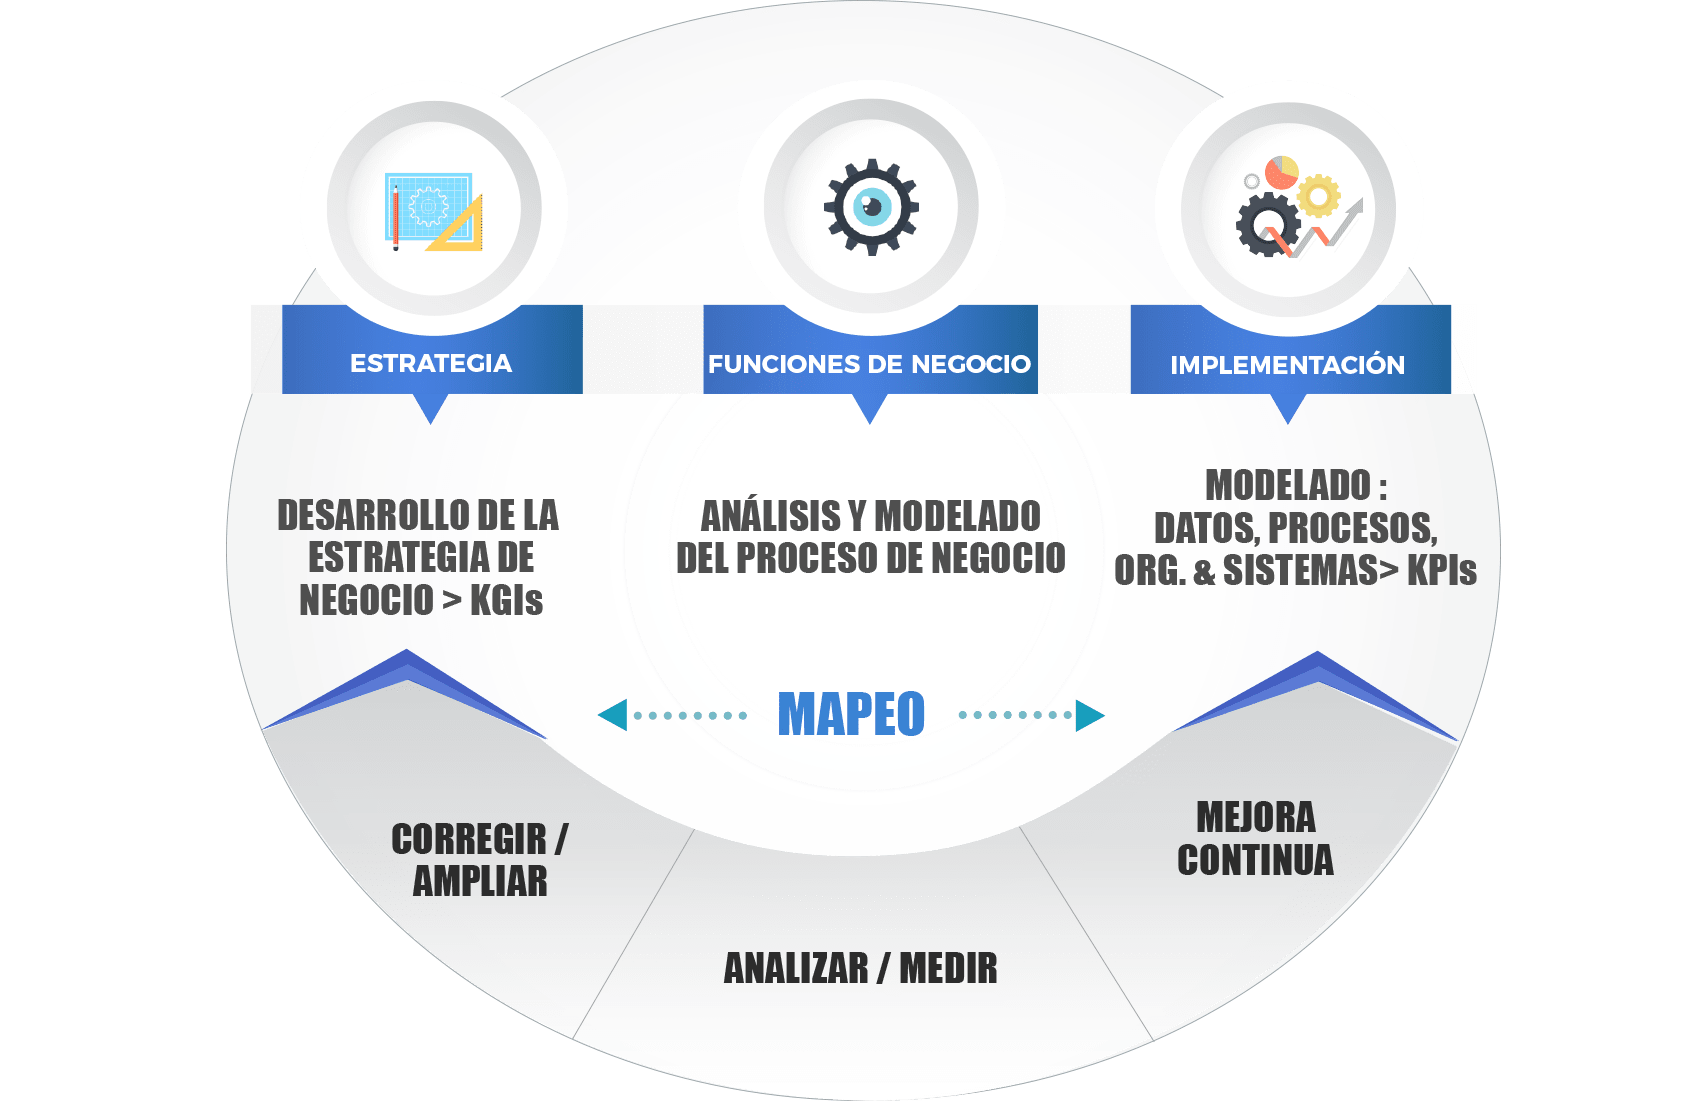  Imagen Infografica Sine95 Modelo de proceso de negocio